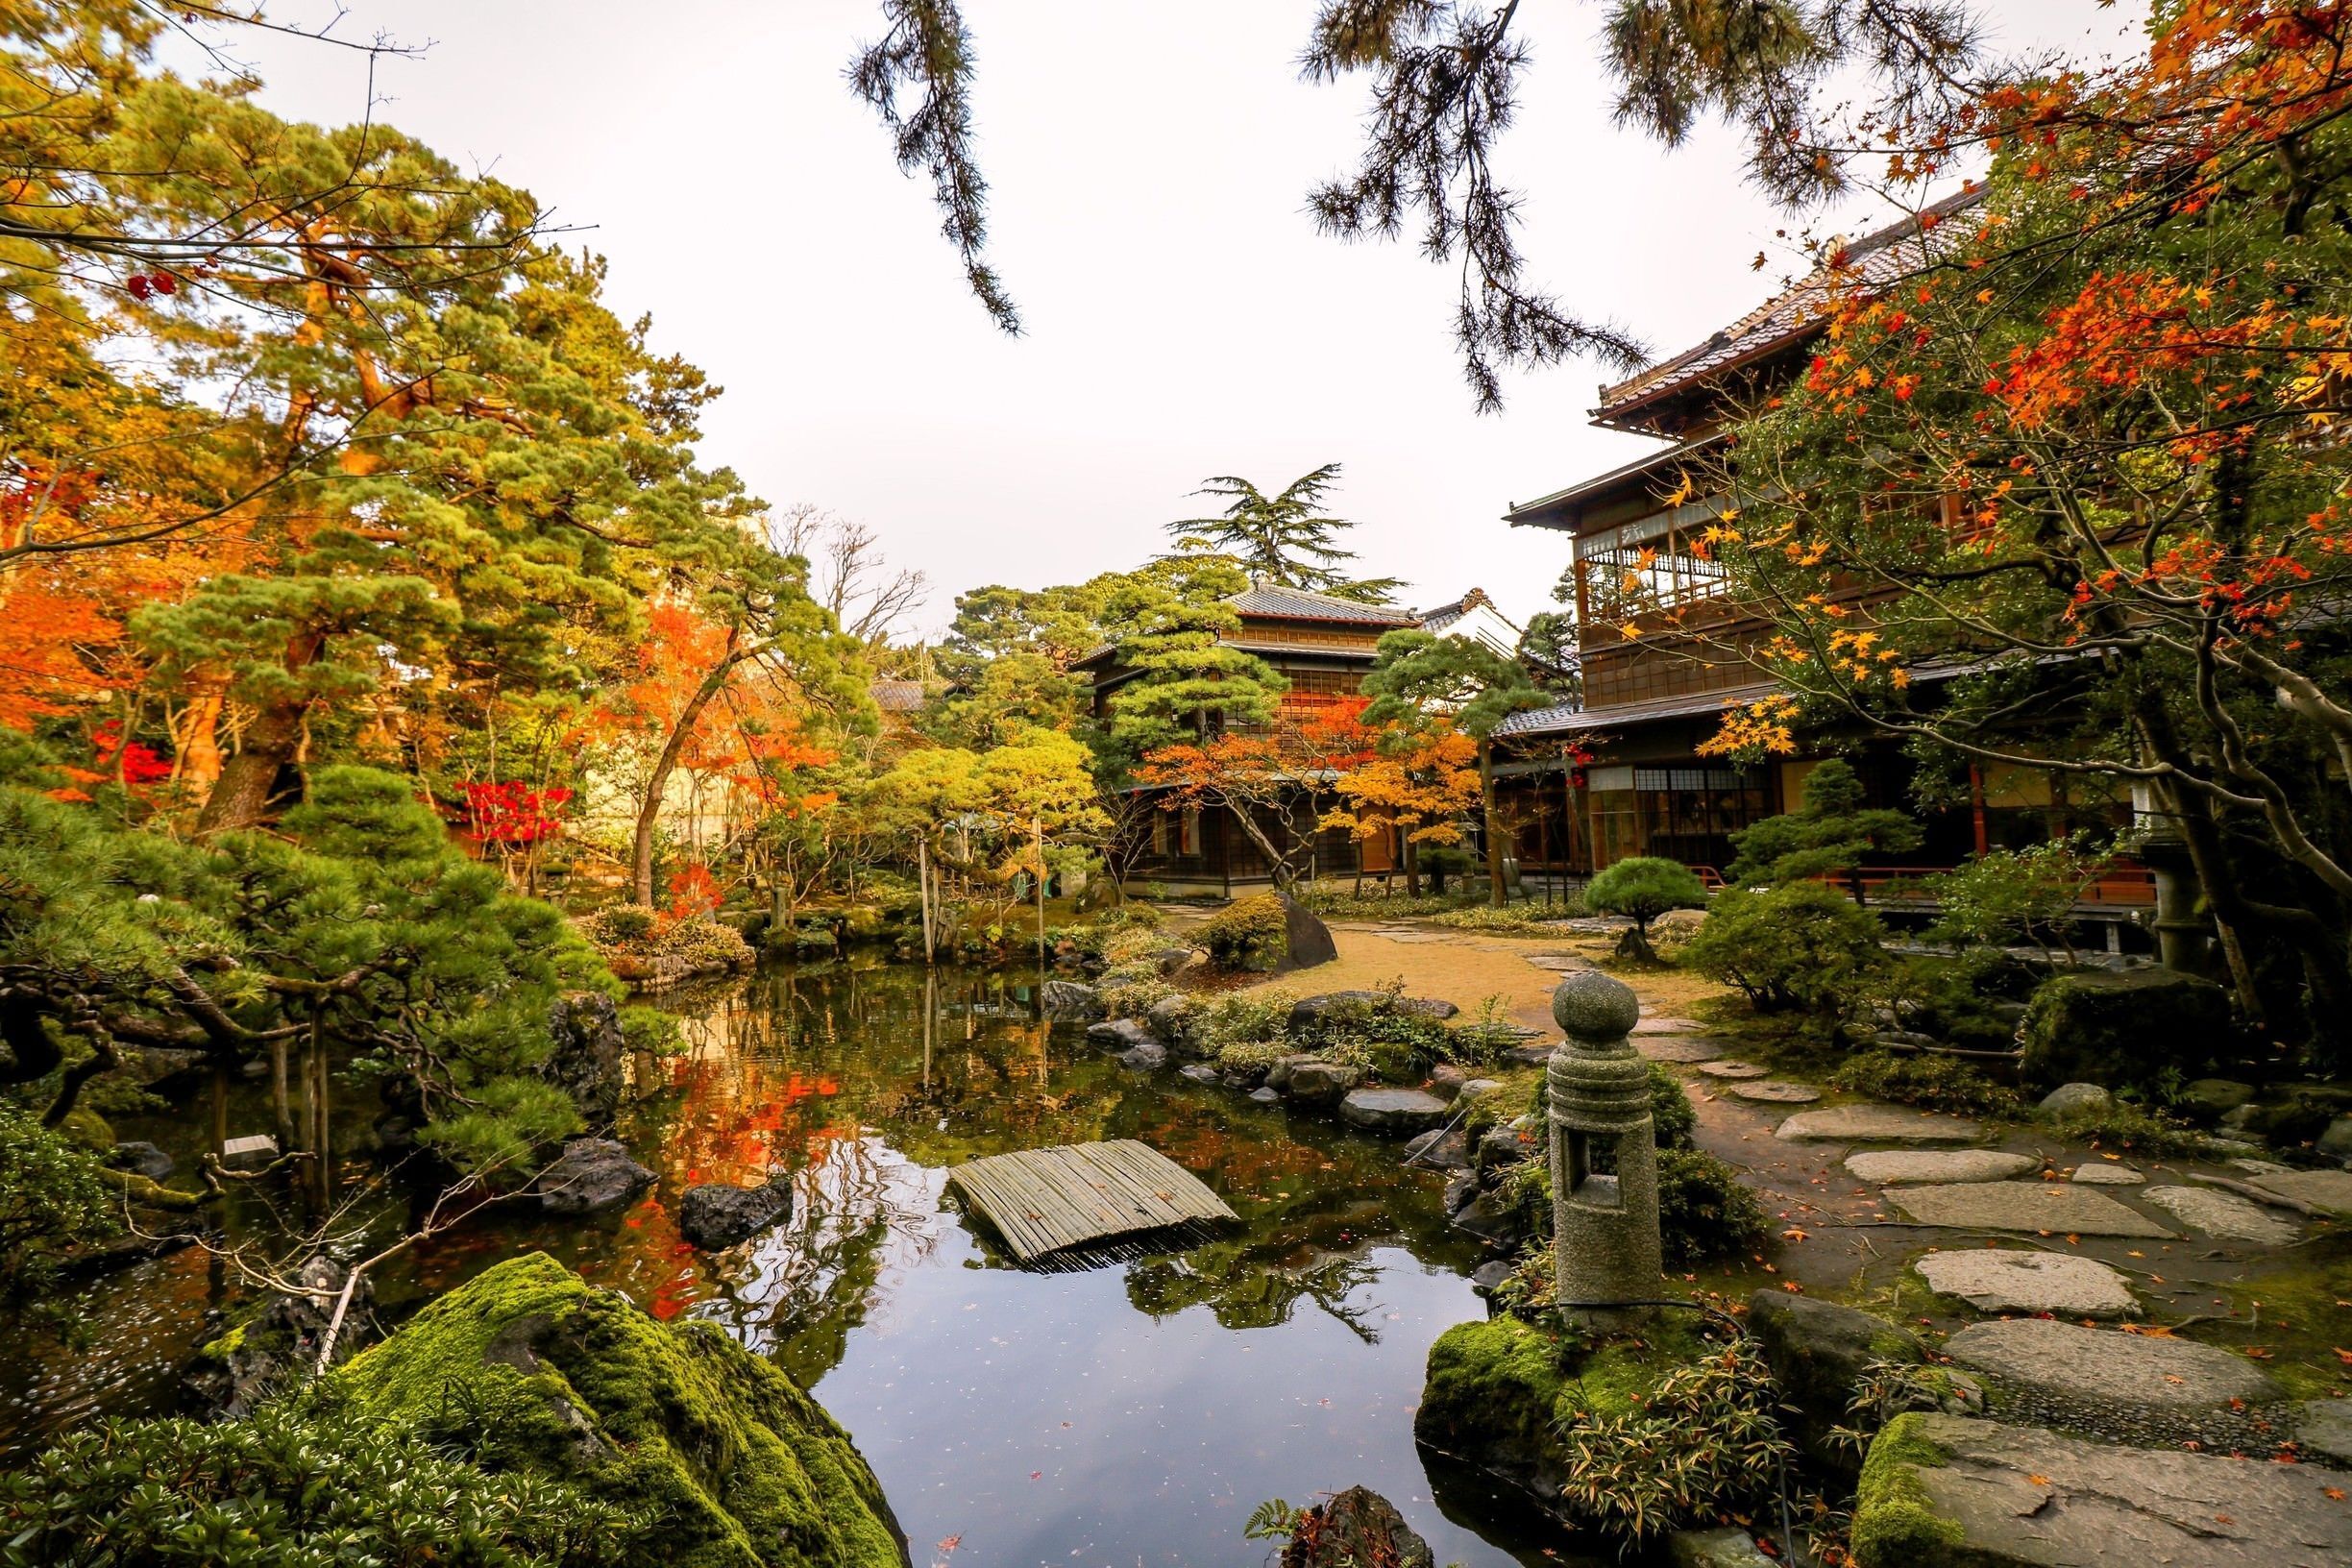 japanese garden with pond